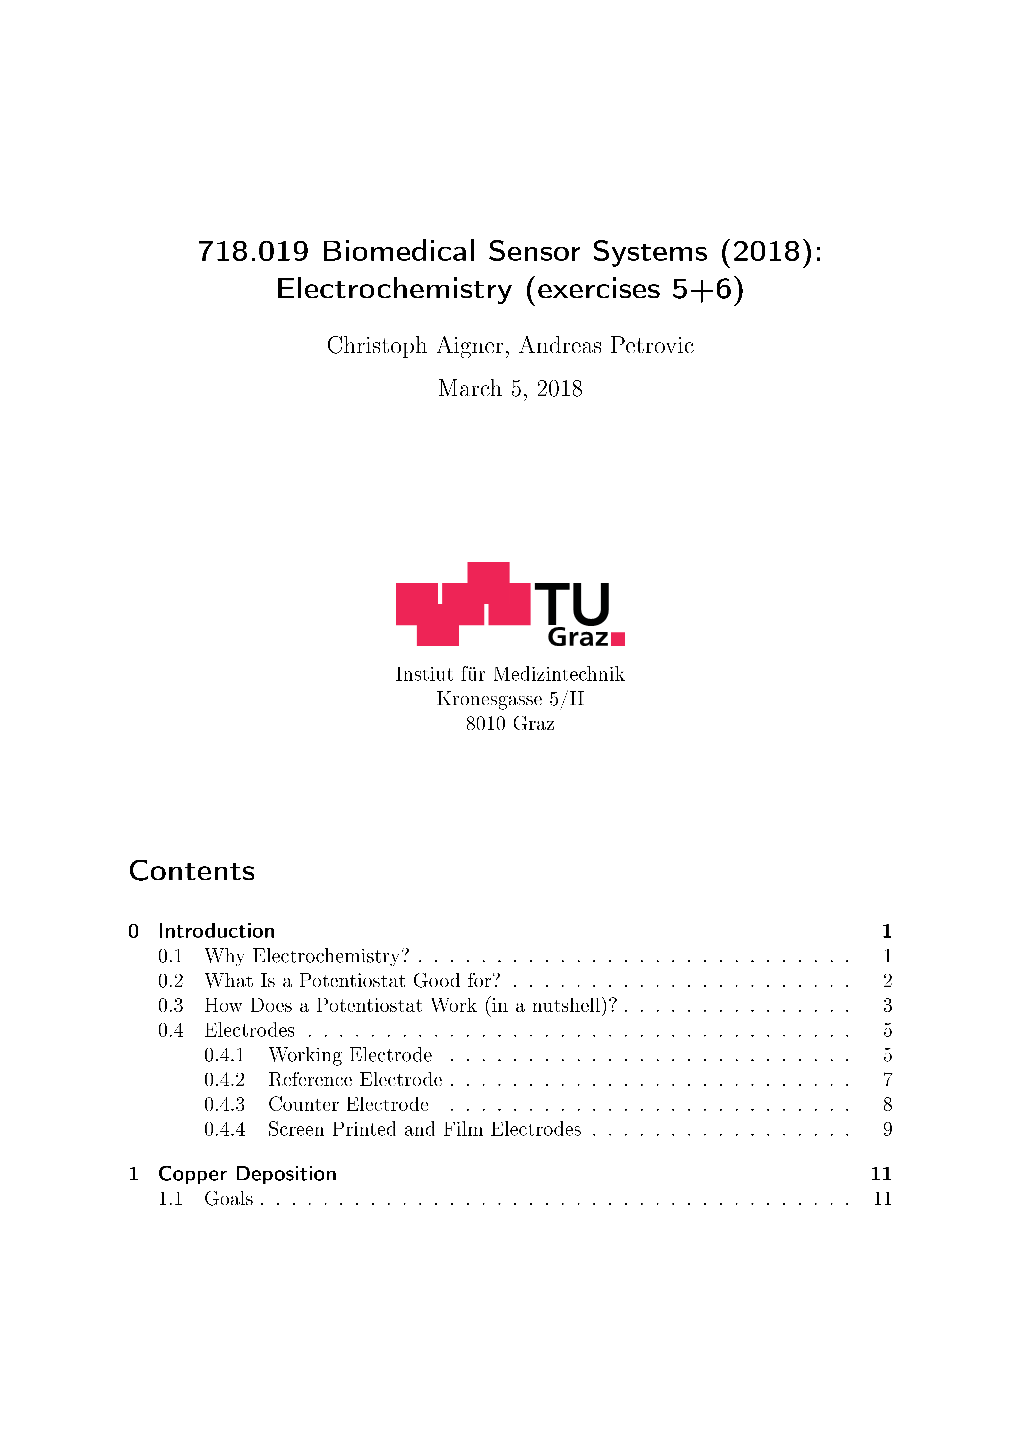 718.019 Biomedical Sensor Systems (2018): Electrochemistry (Exercises 5+6)